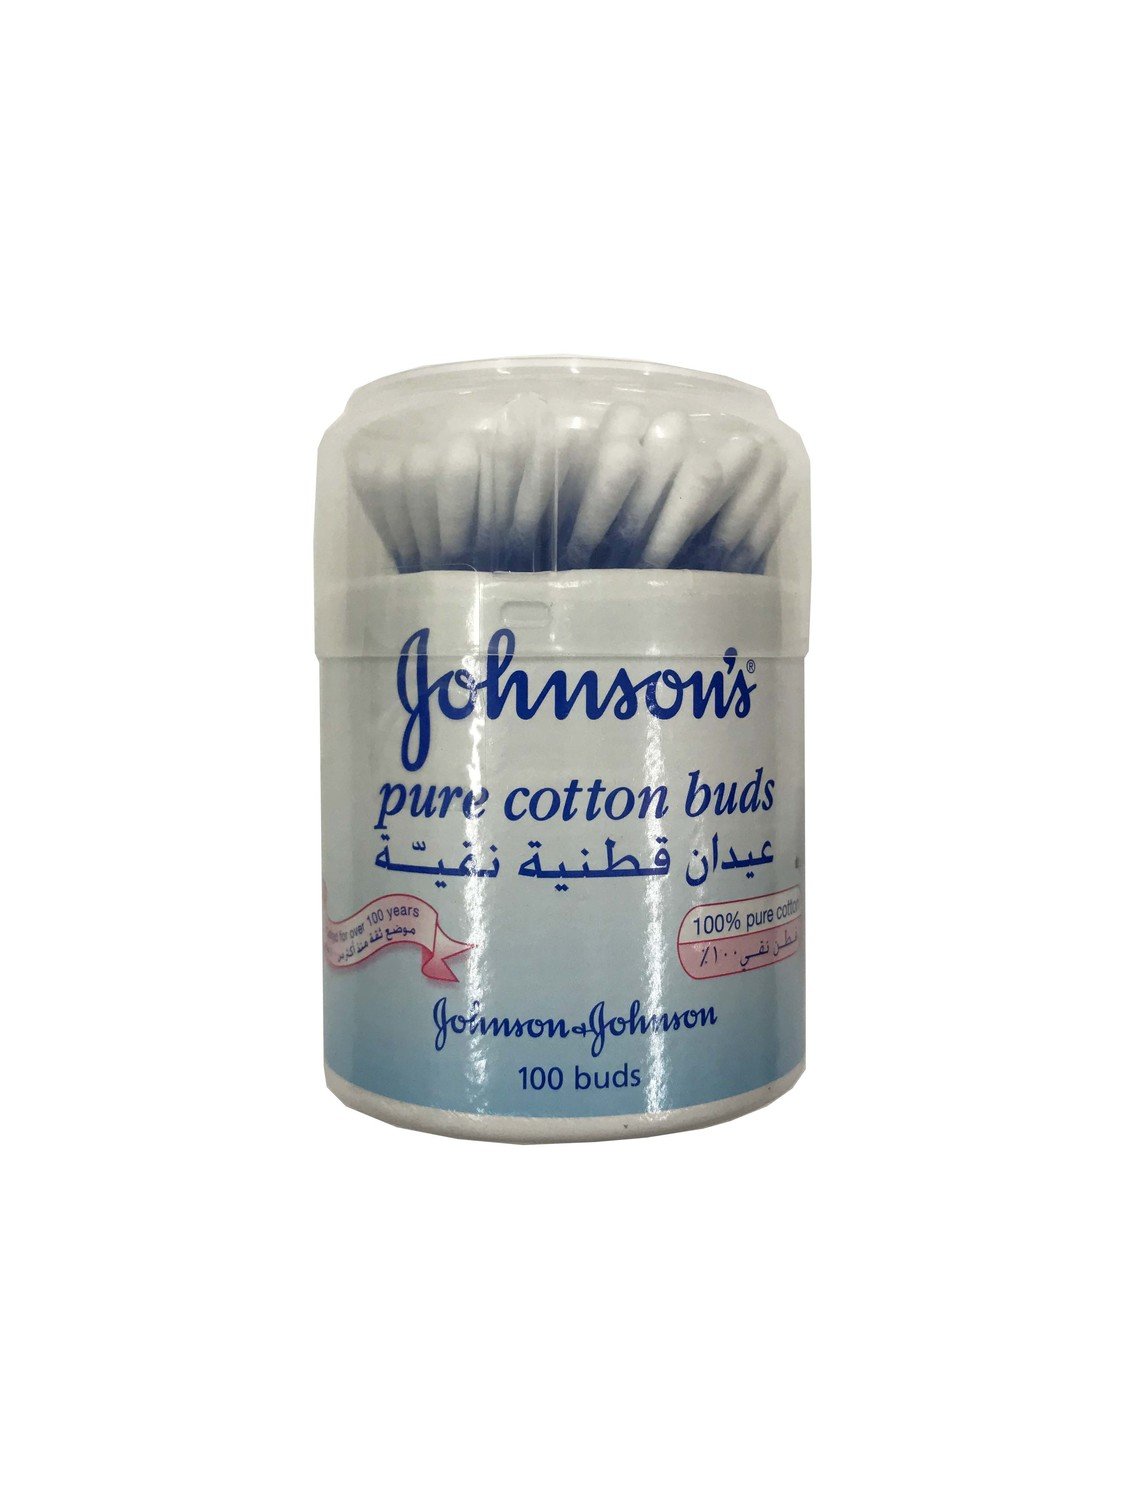 Johnson's Pure Cotton Buds 100buds